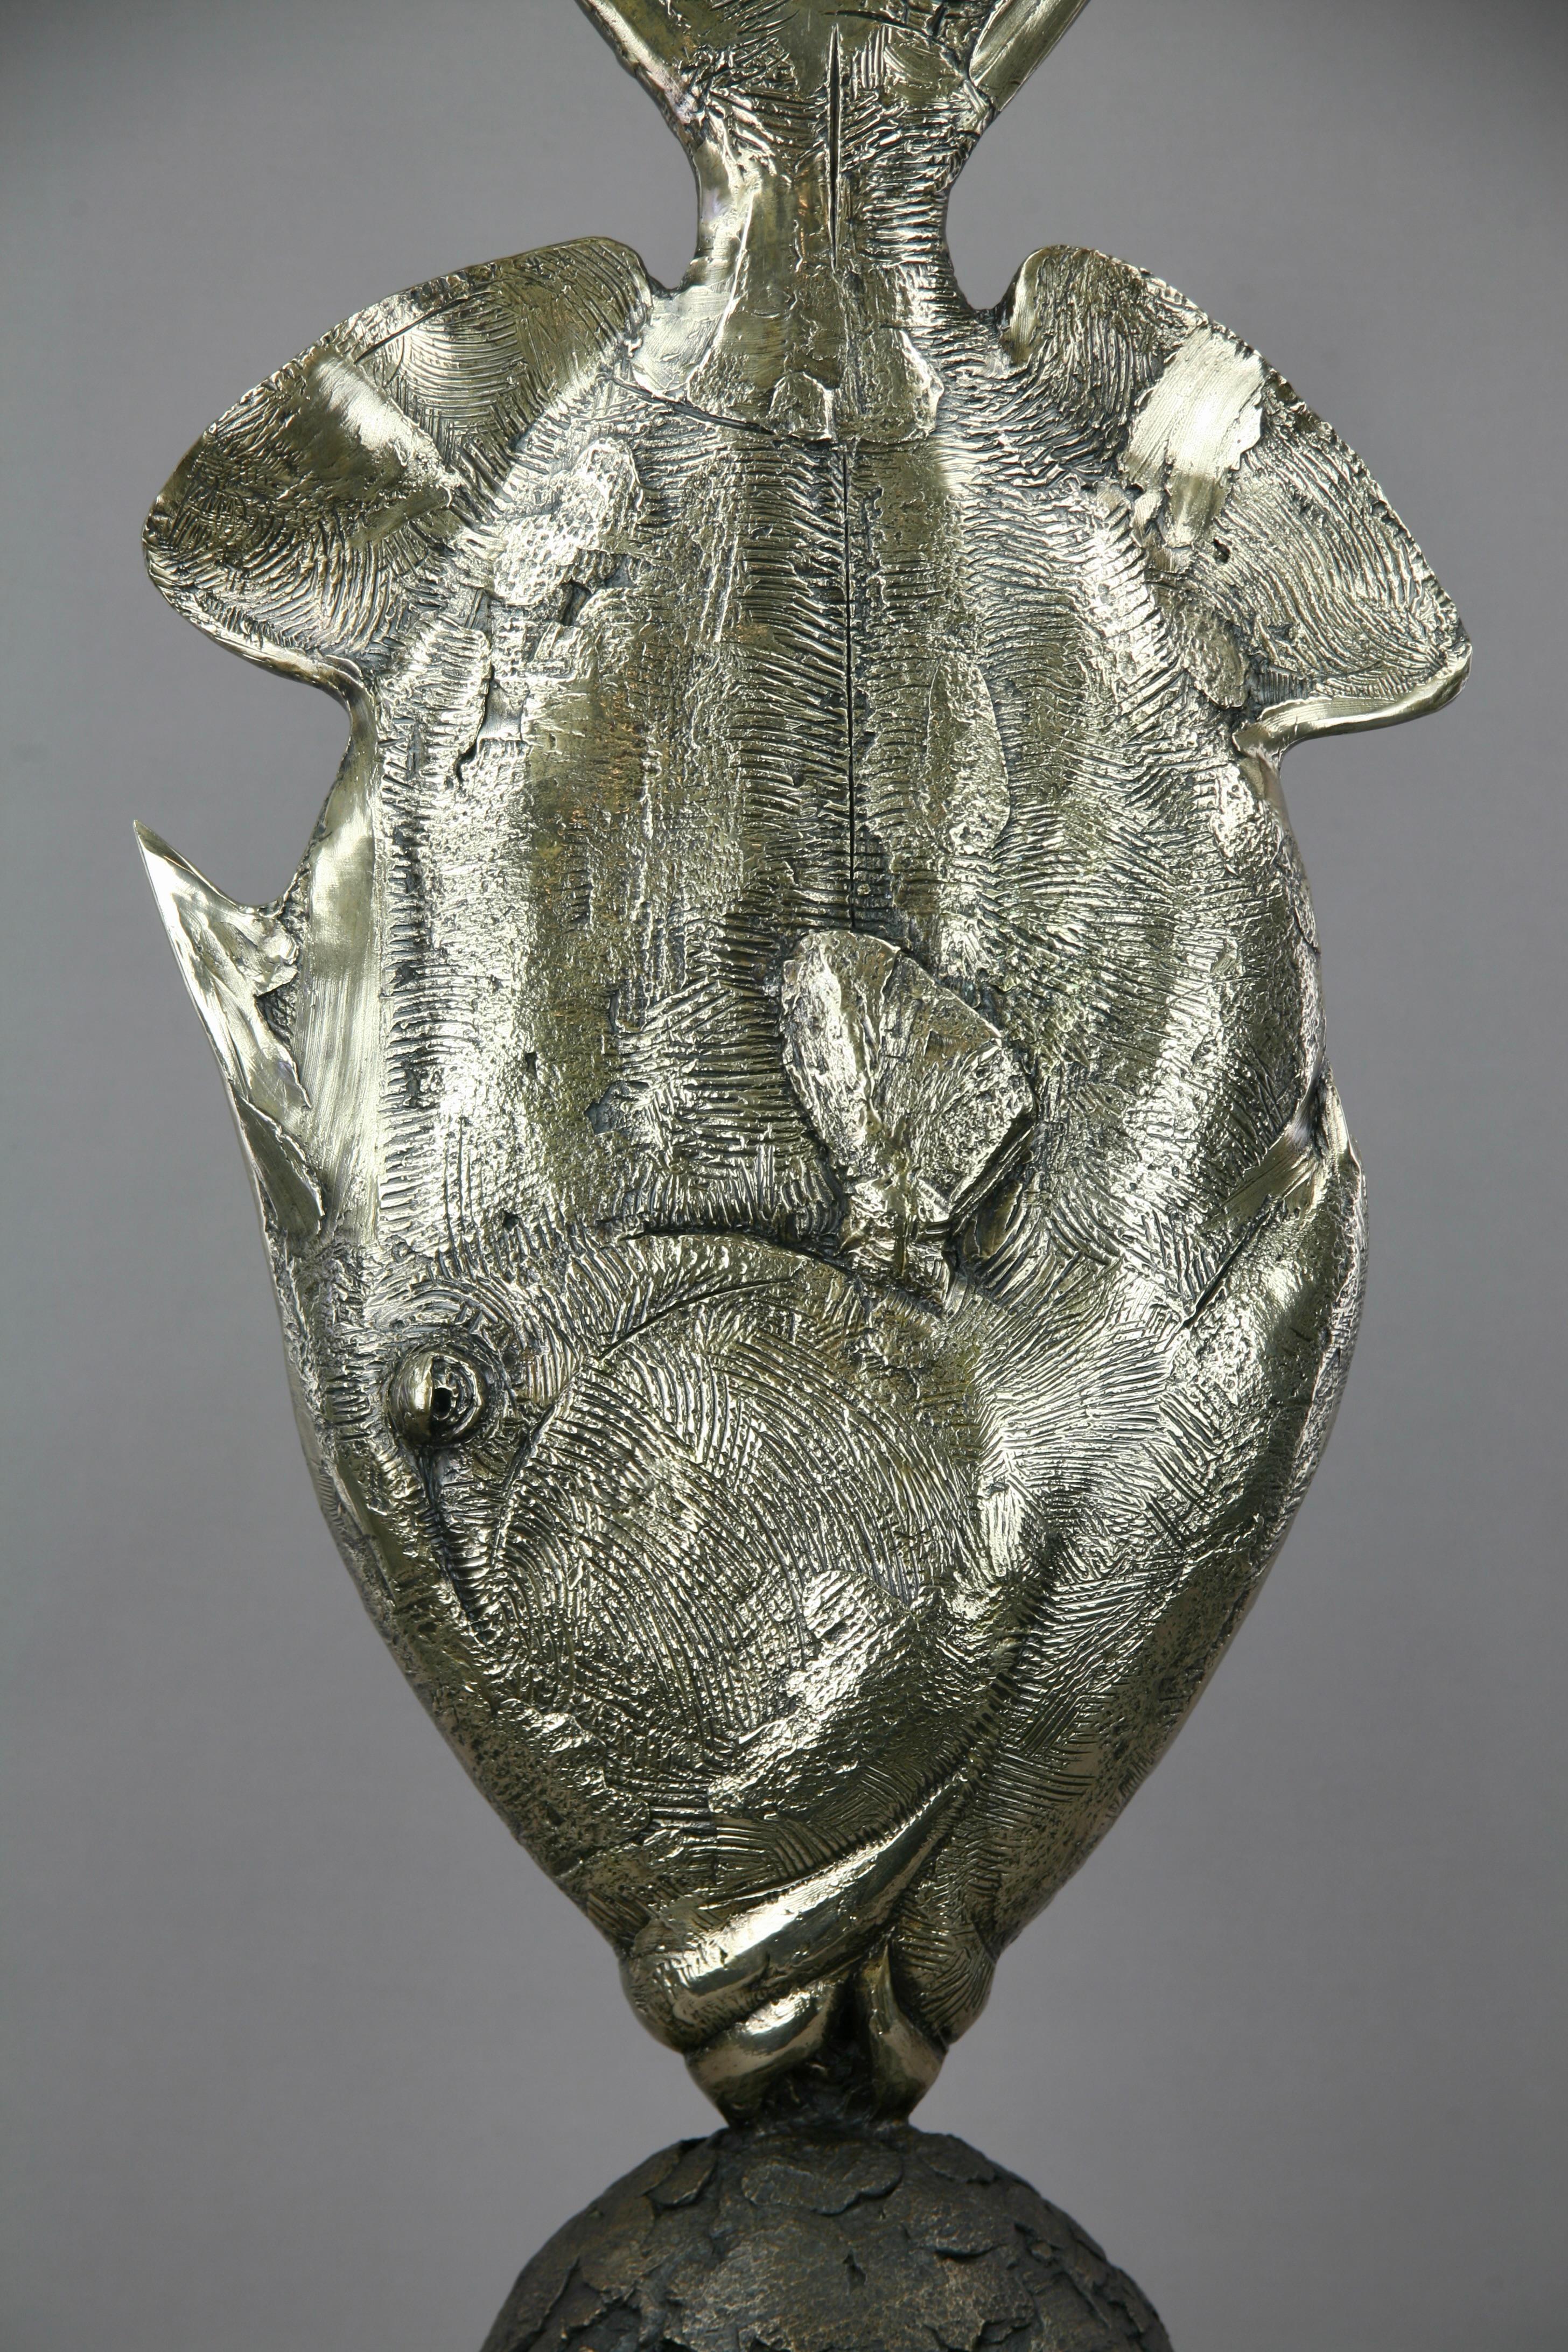 Poisson-tigre Titan - sculpture originale en bronze de la faune marine - Art contemporain - Sculpture de Andrzej Szymczyk